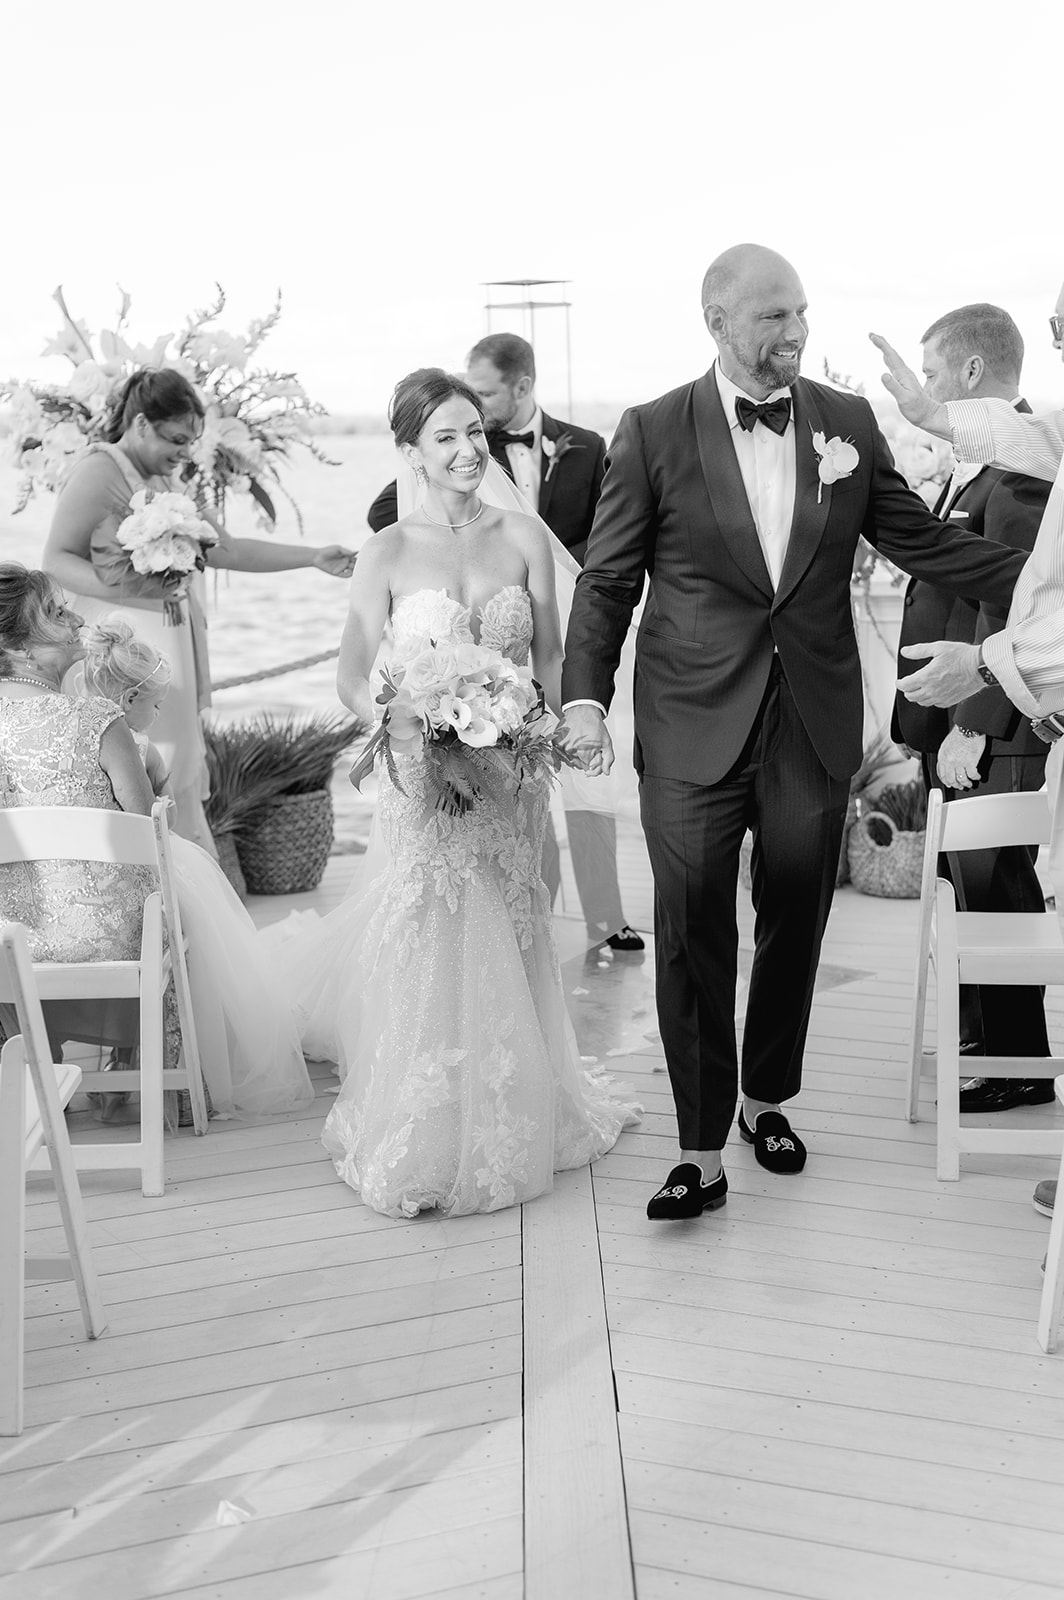 Naples Florida Wedding Photographer - Memories to Last a Lifetime
